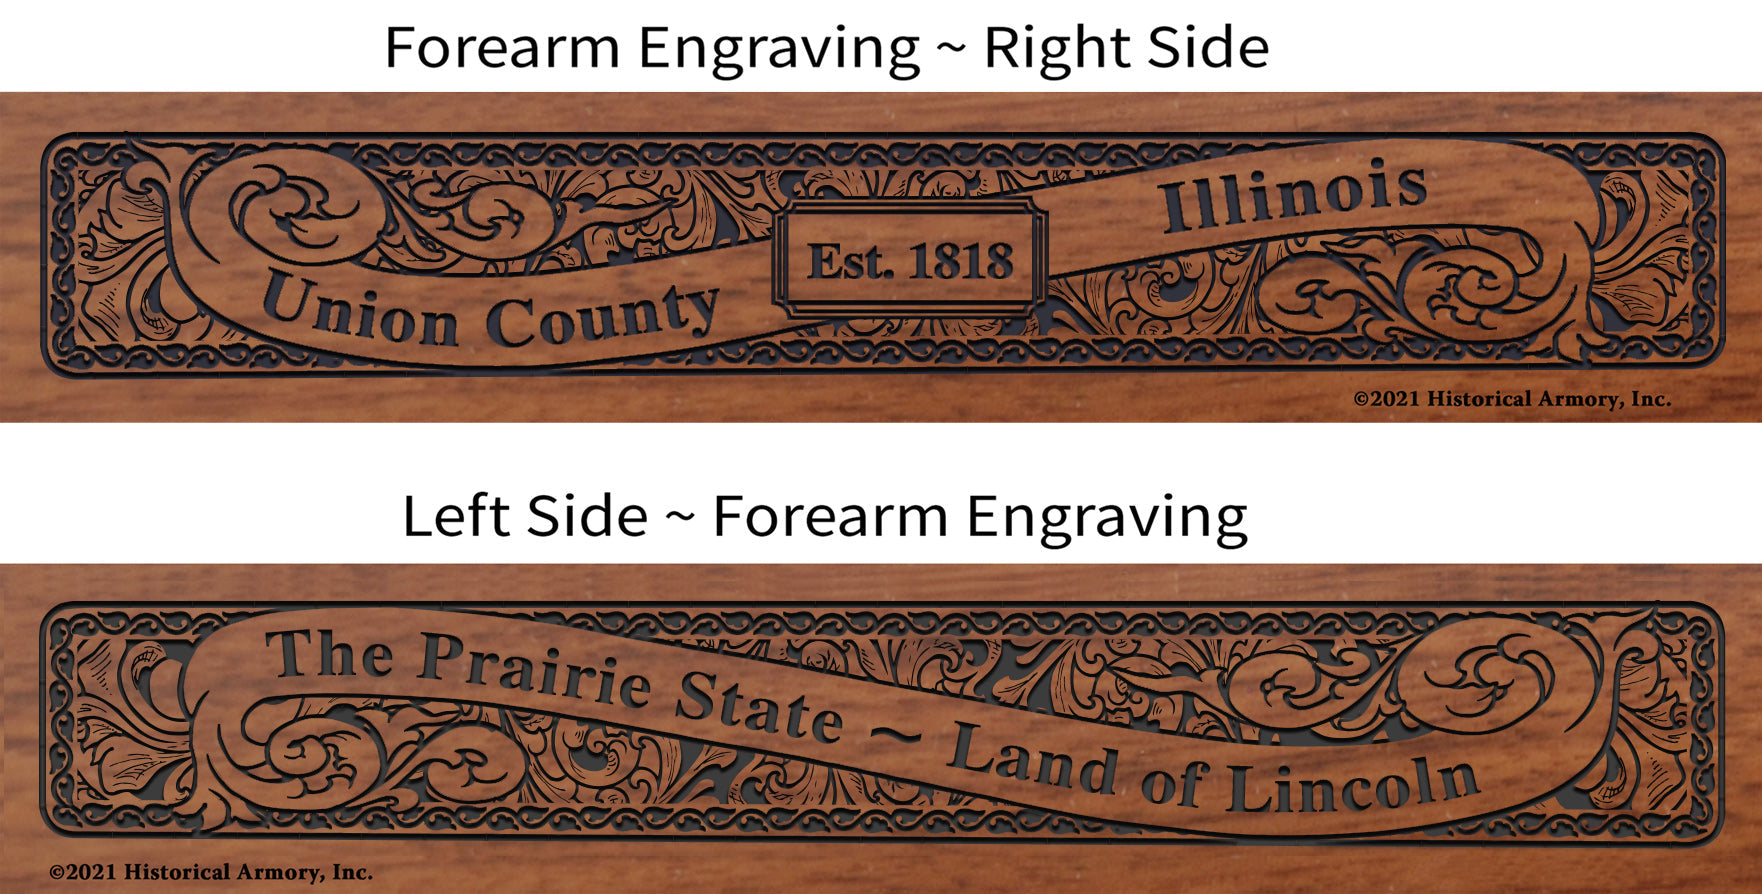 Union County Illinois Establishment and Motto History Engraved Rifle Forearm